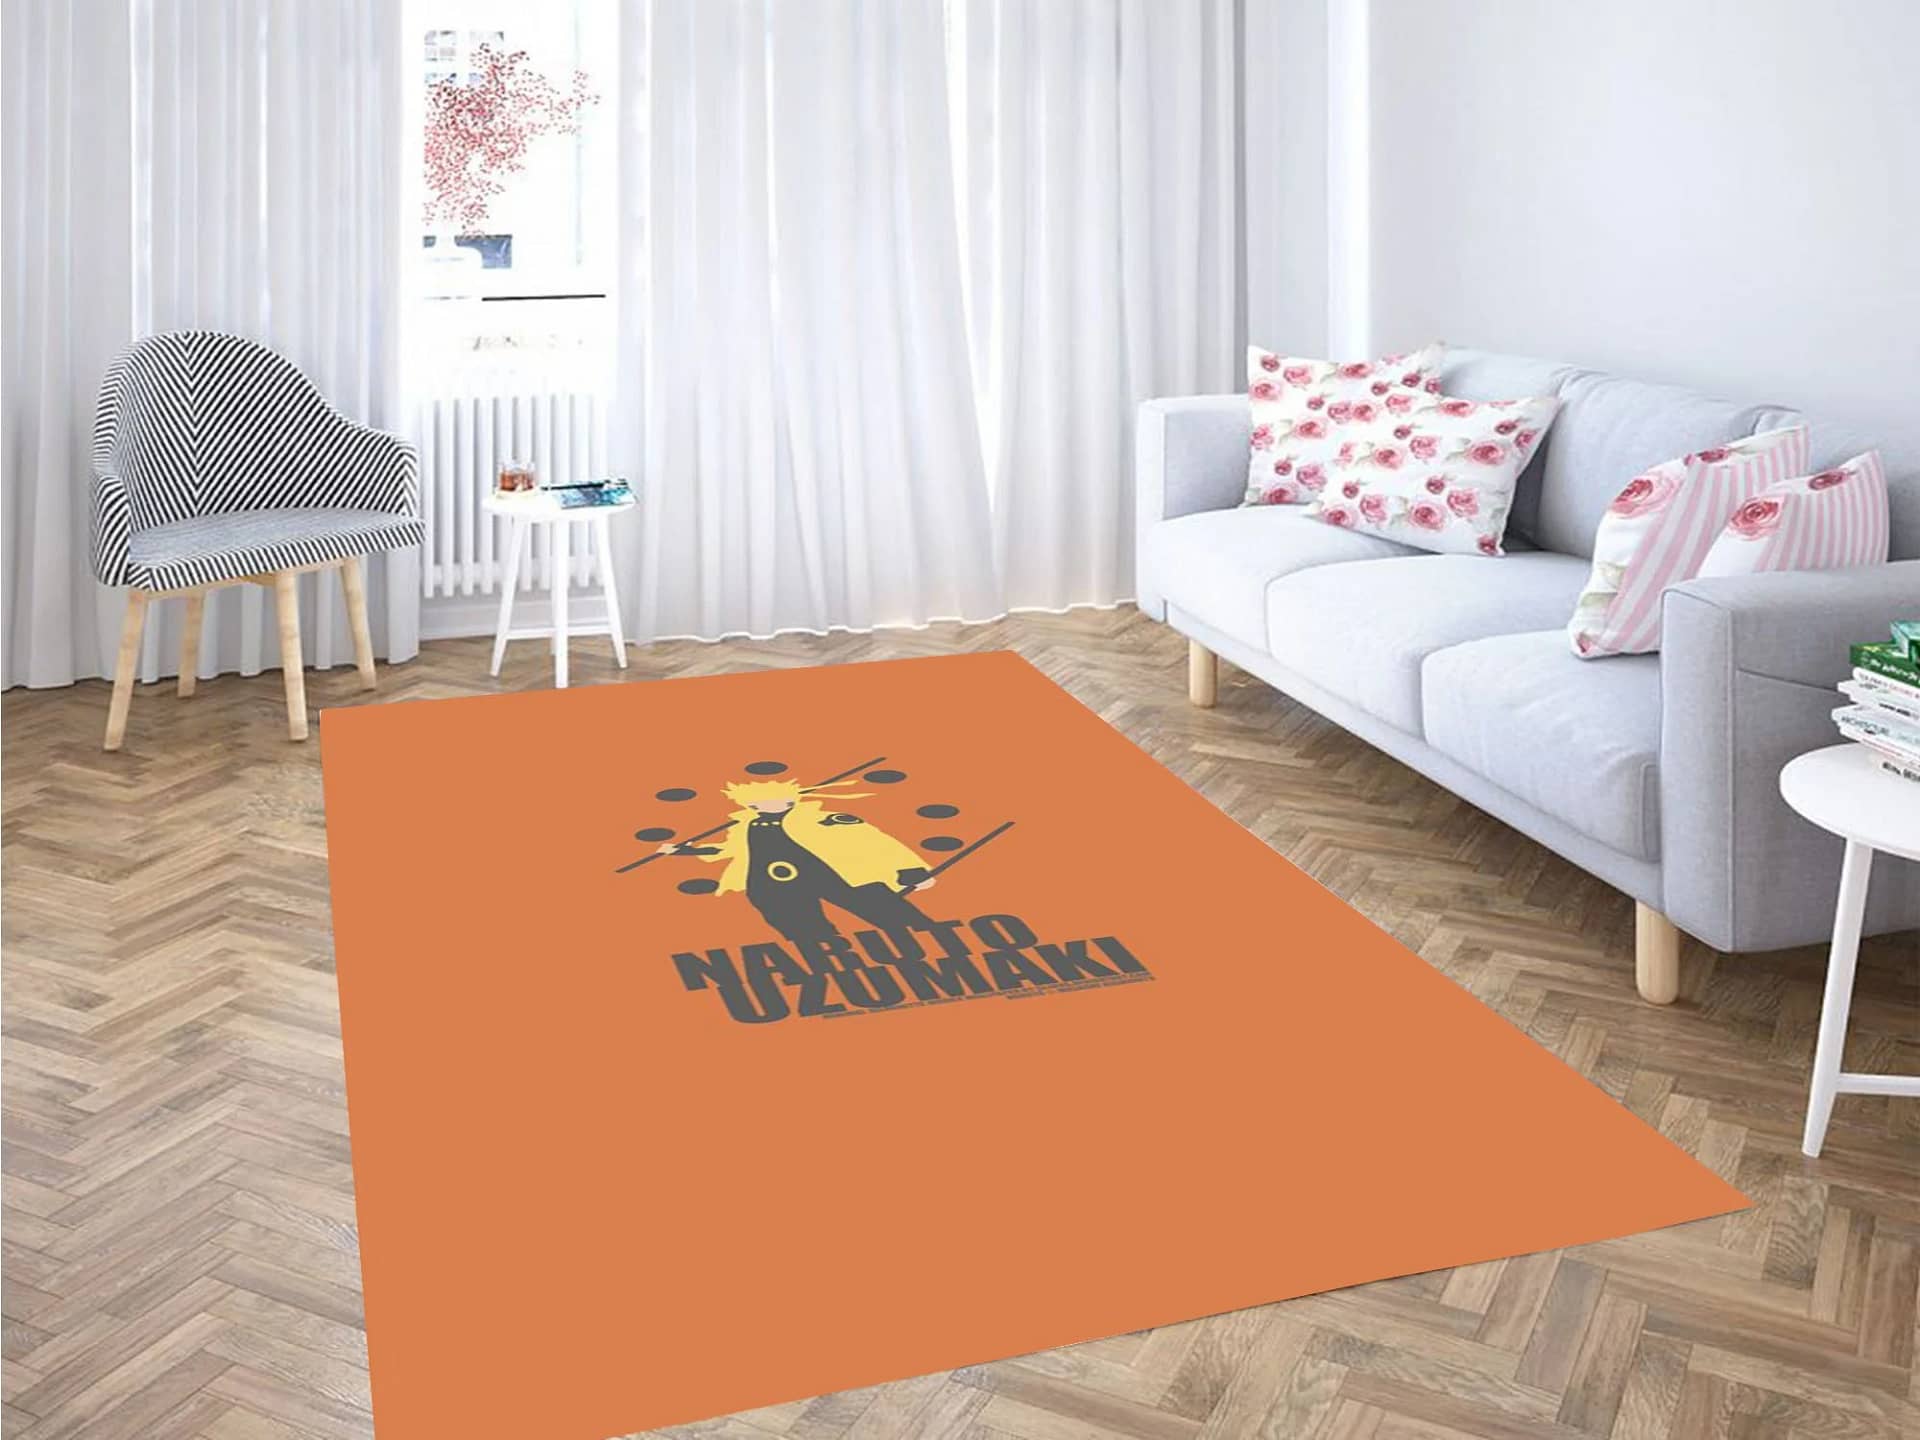 Naruto Wallpaper Simple Carpet Rug